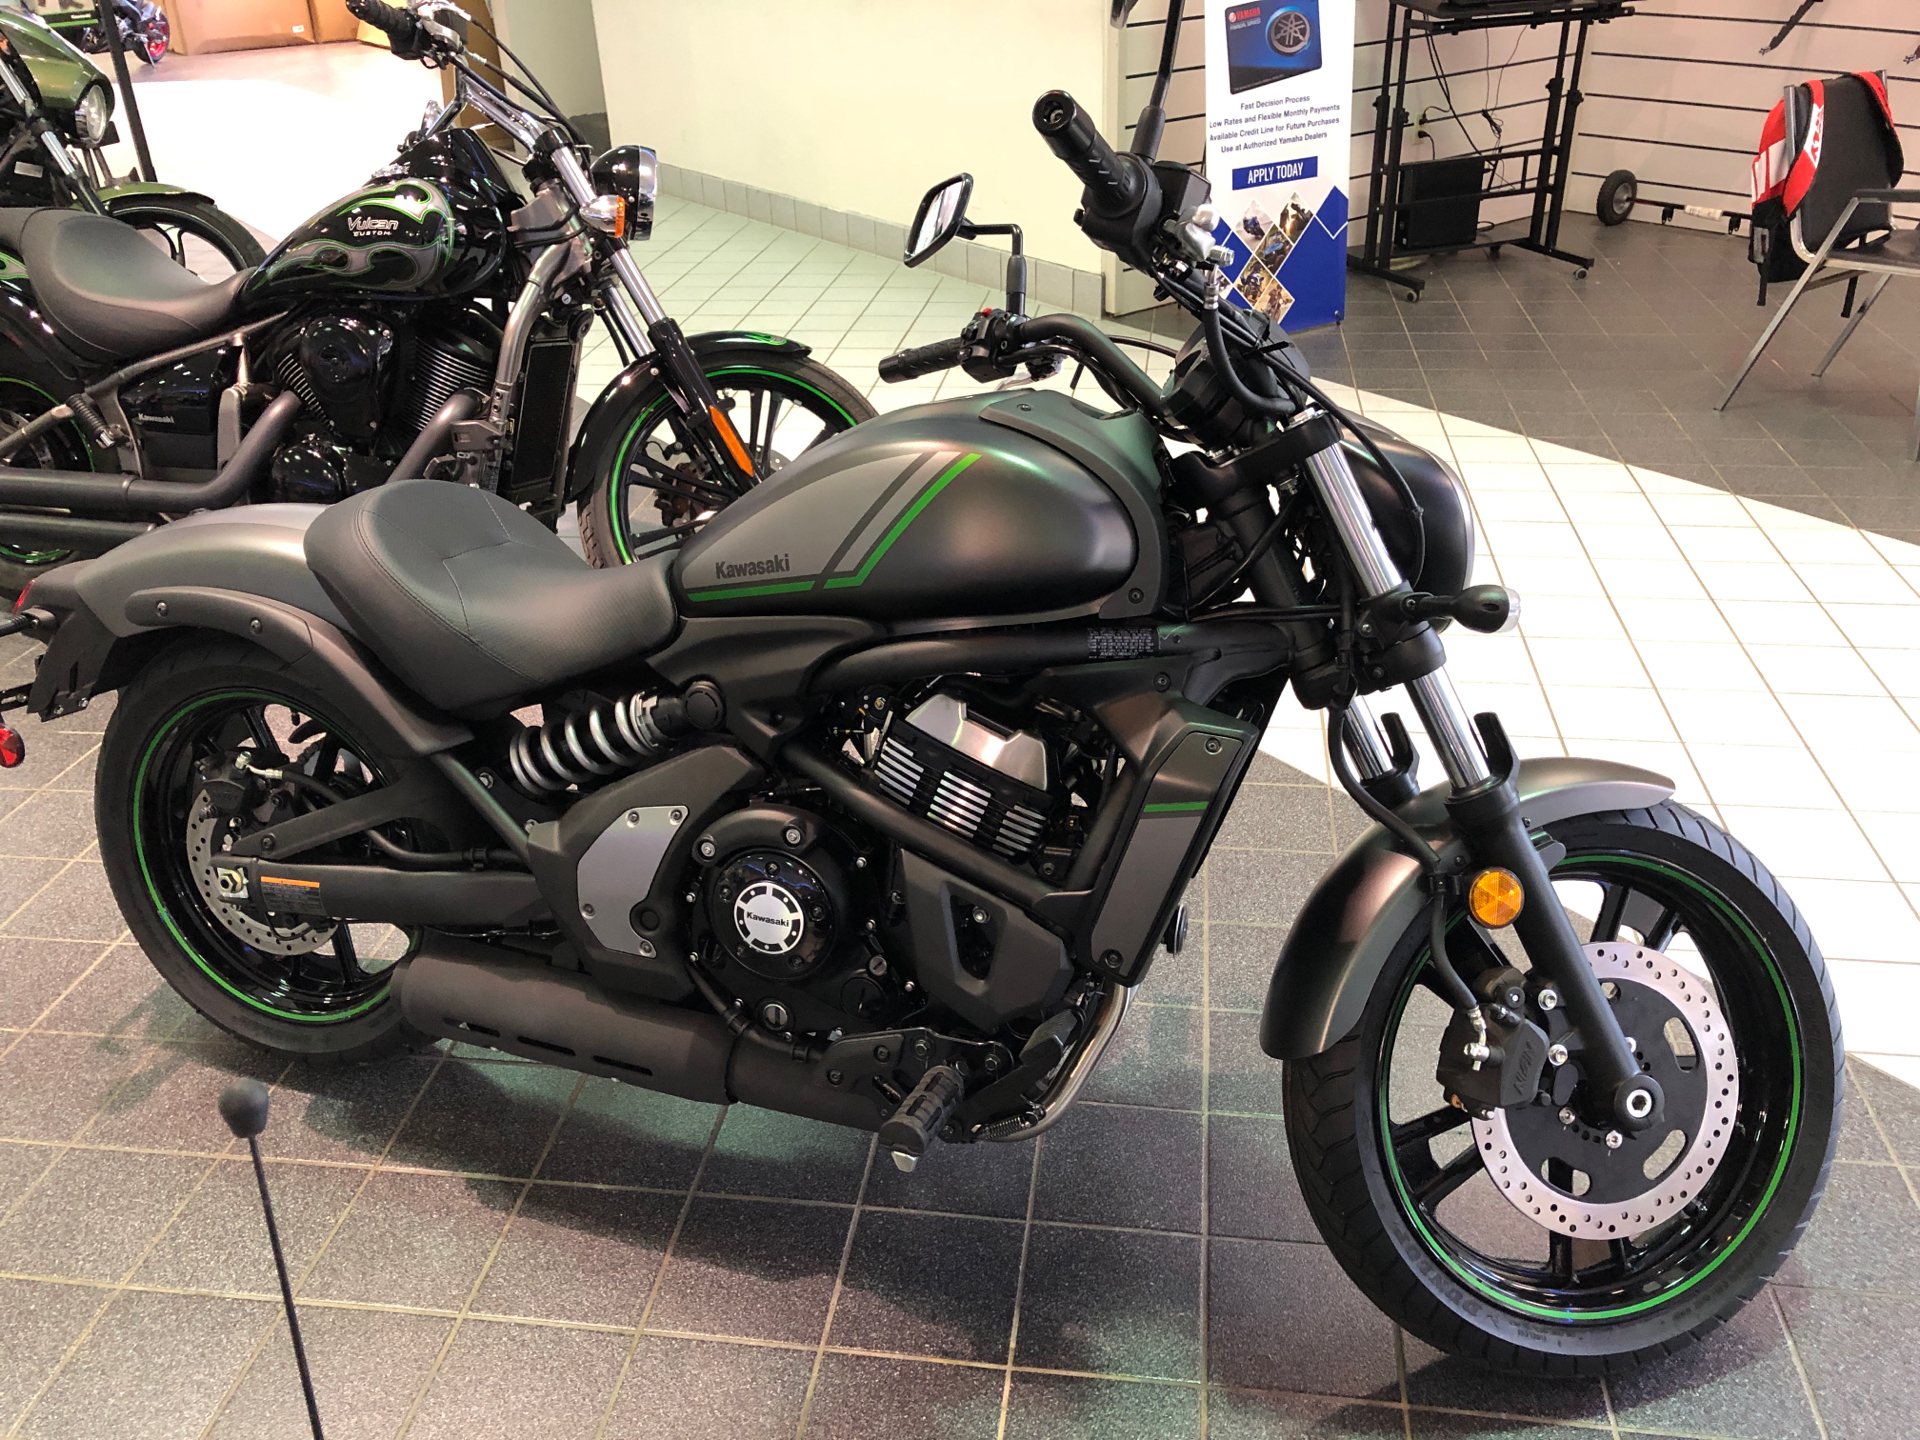 New 2022 Kawasaki Vulcan S | Motorcycles in Asheville NC Metallic Matte Graphenesteel Gray / Metallic Matte Graphite Gray A04347